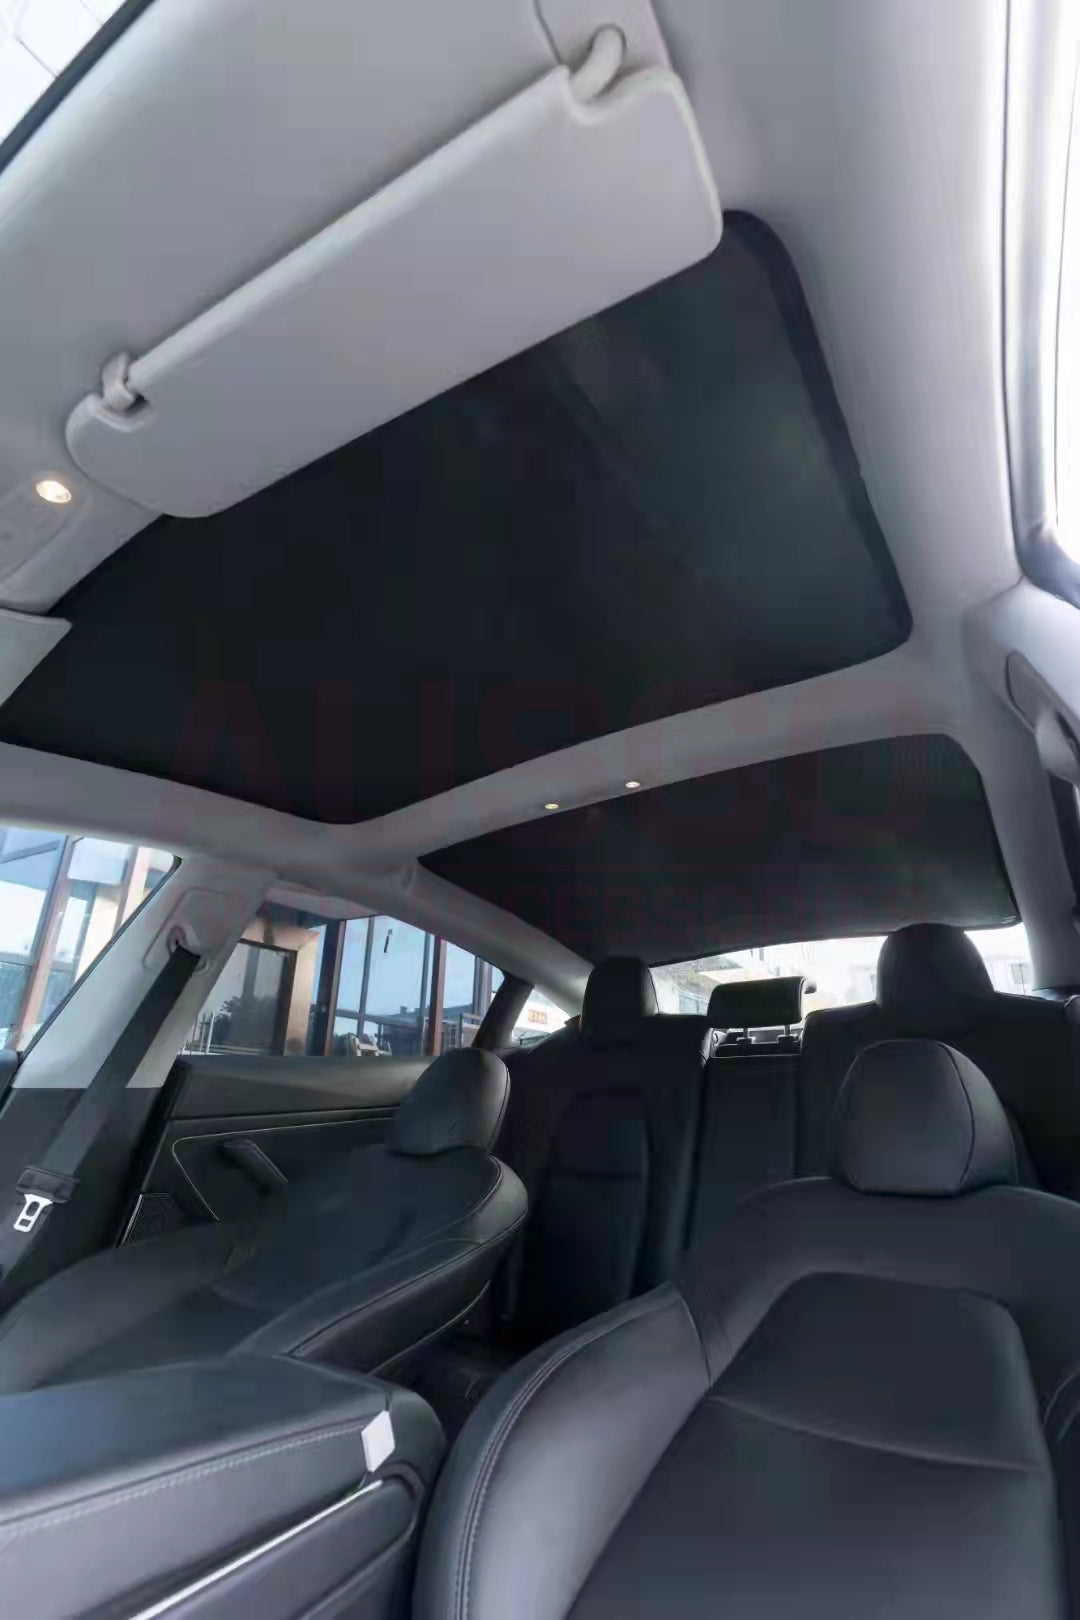 TPE Floor Mats + Sunroof Shade + Front + Rear Cargo Mats for Tesla Model 3 2019-2021 Door Sill Covered Car Mats Boot Liner Sun Shade